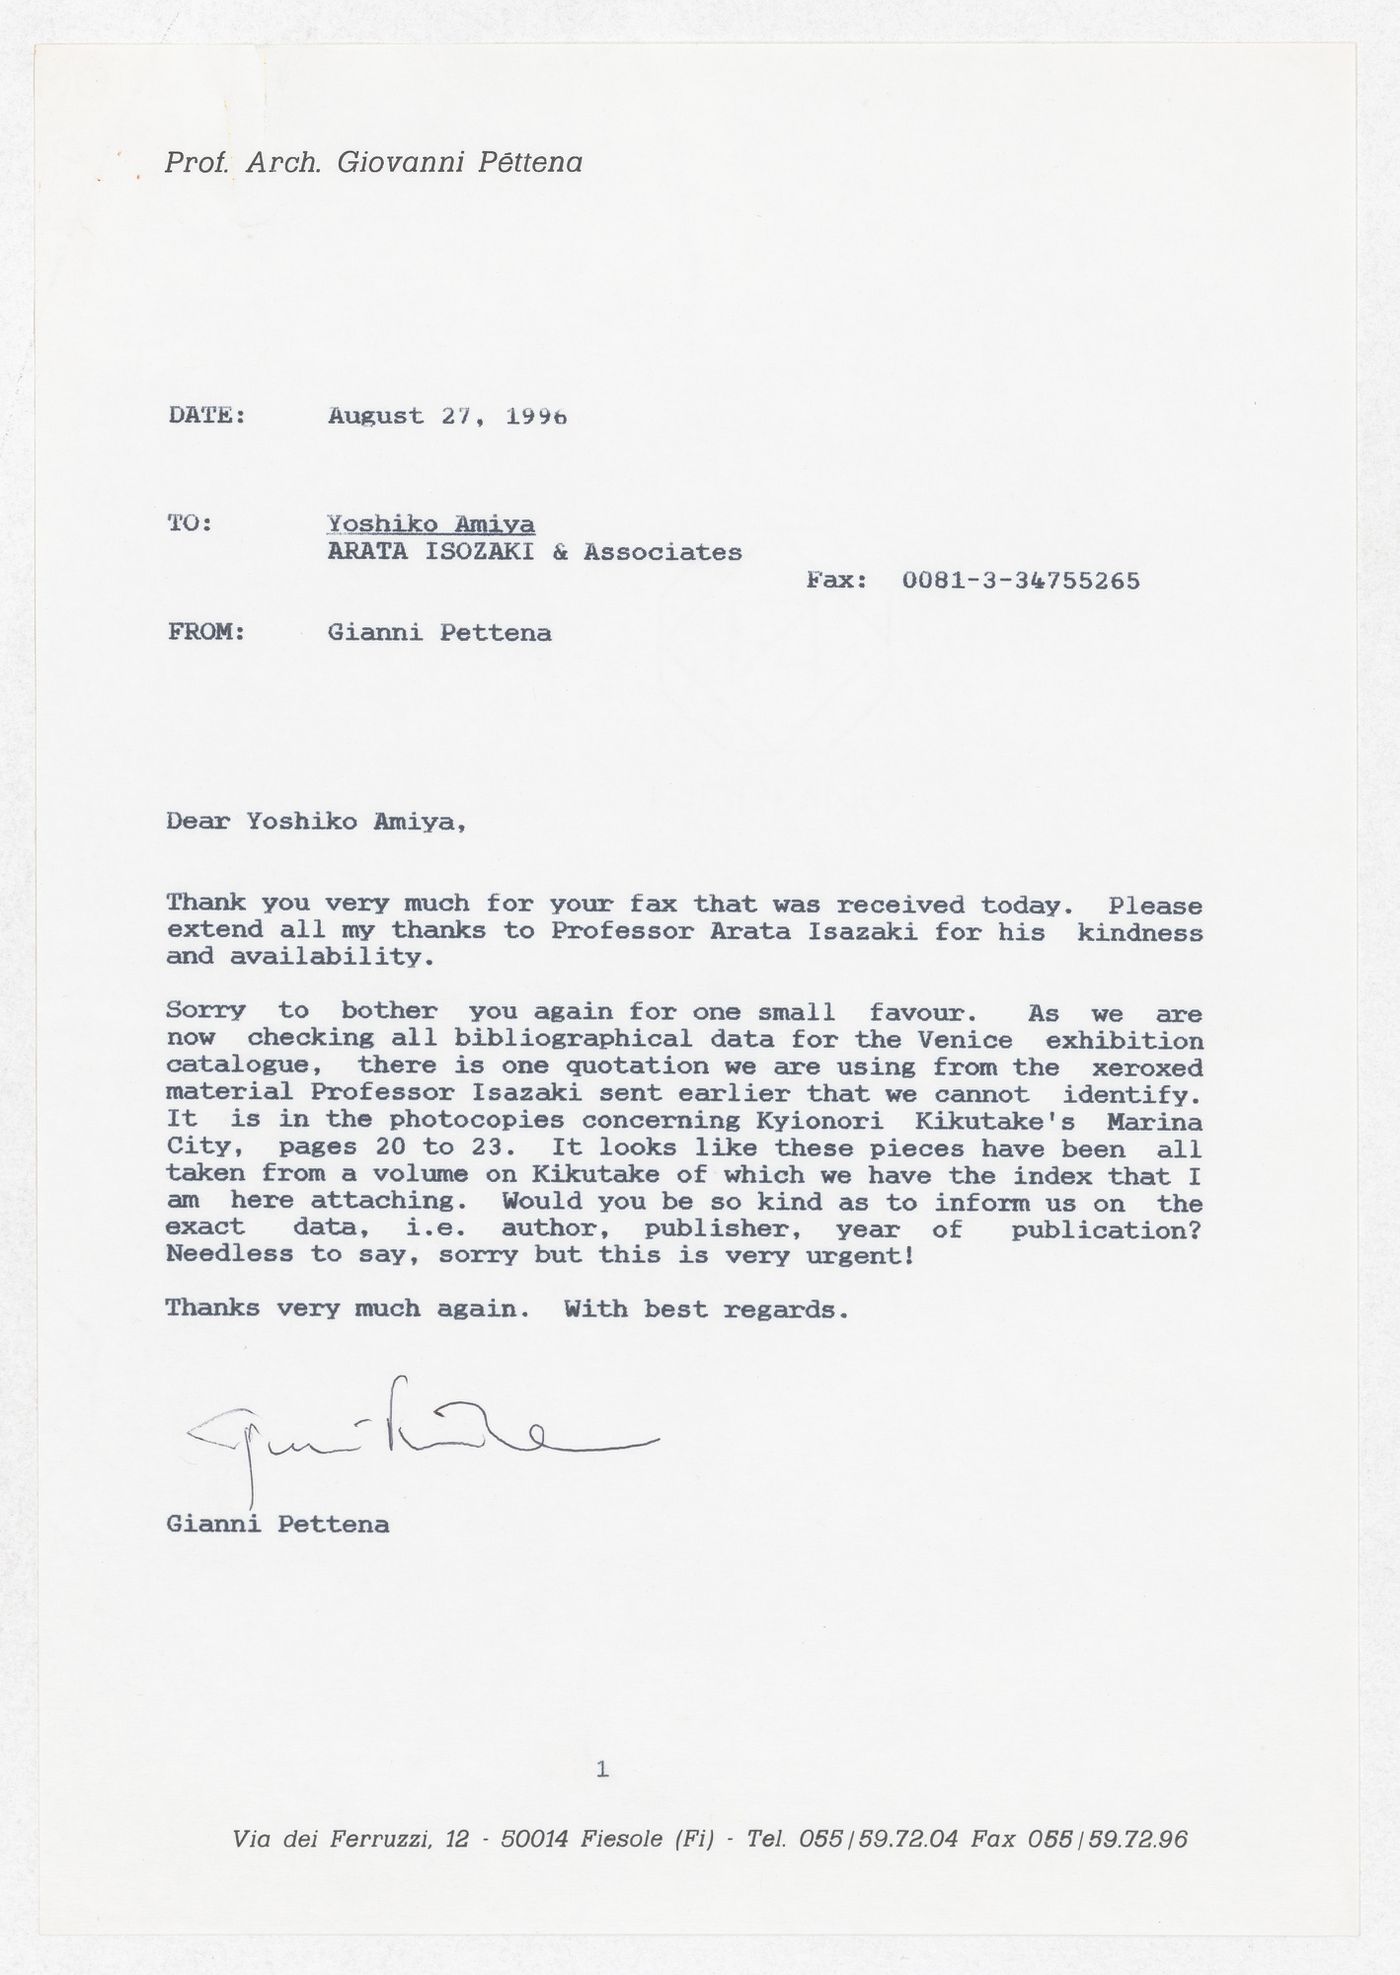 Correspondence with Yoshiko Amiya of Arata Isozaki & Associates regarding the exhibition Radicals. Architecttura e Design 1960-1975